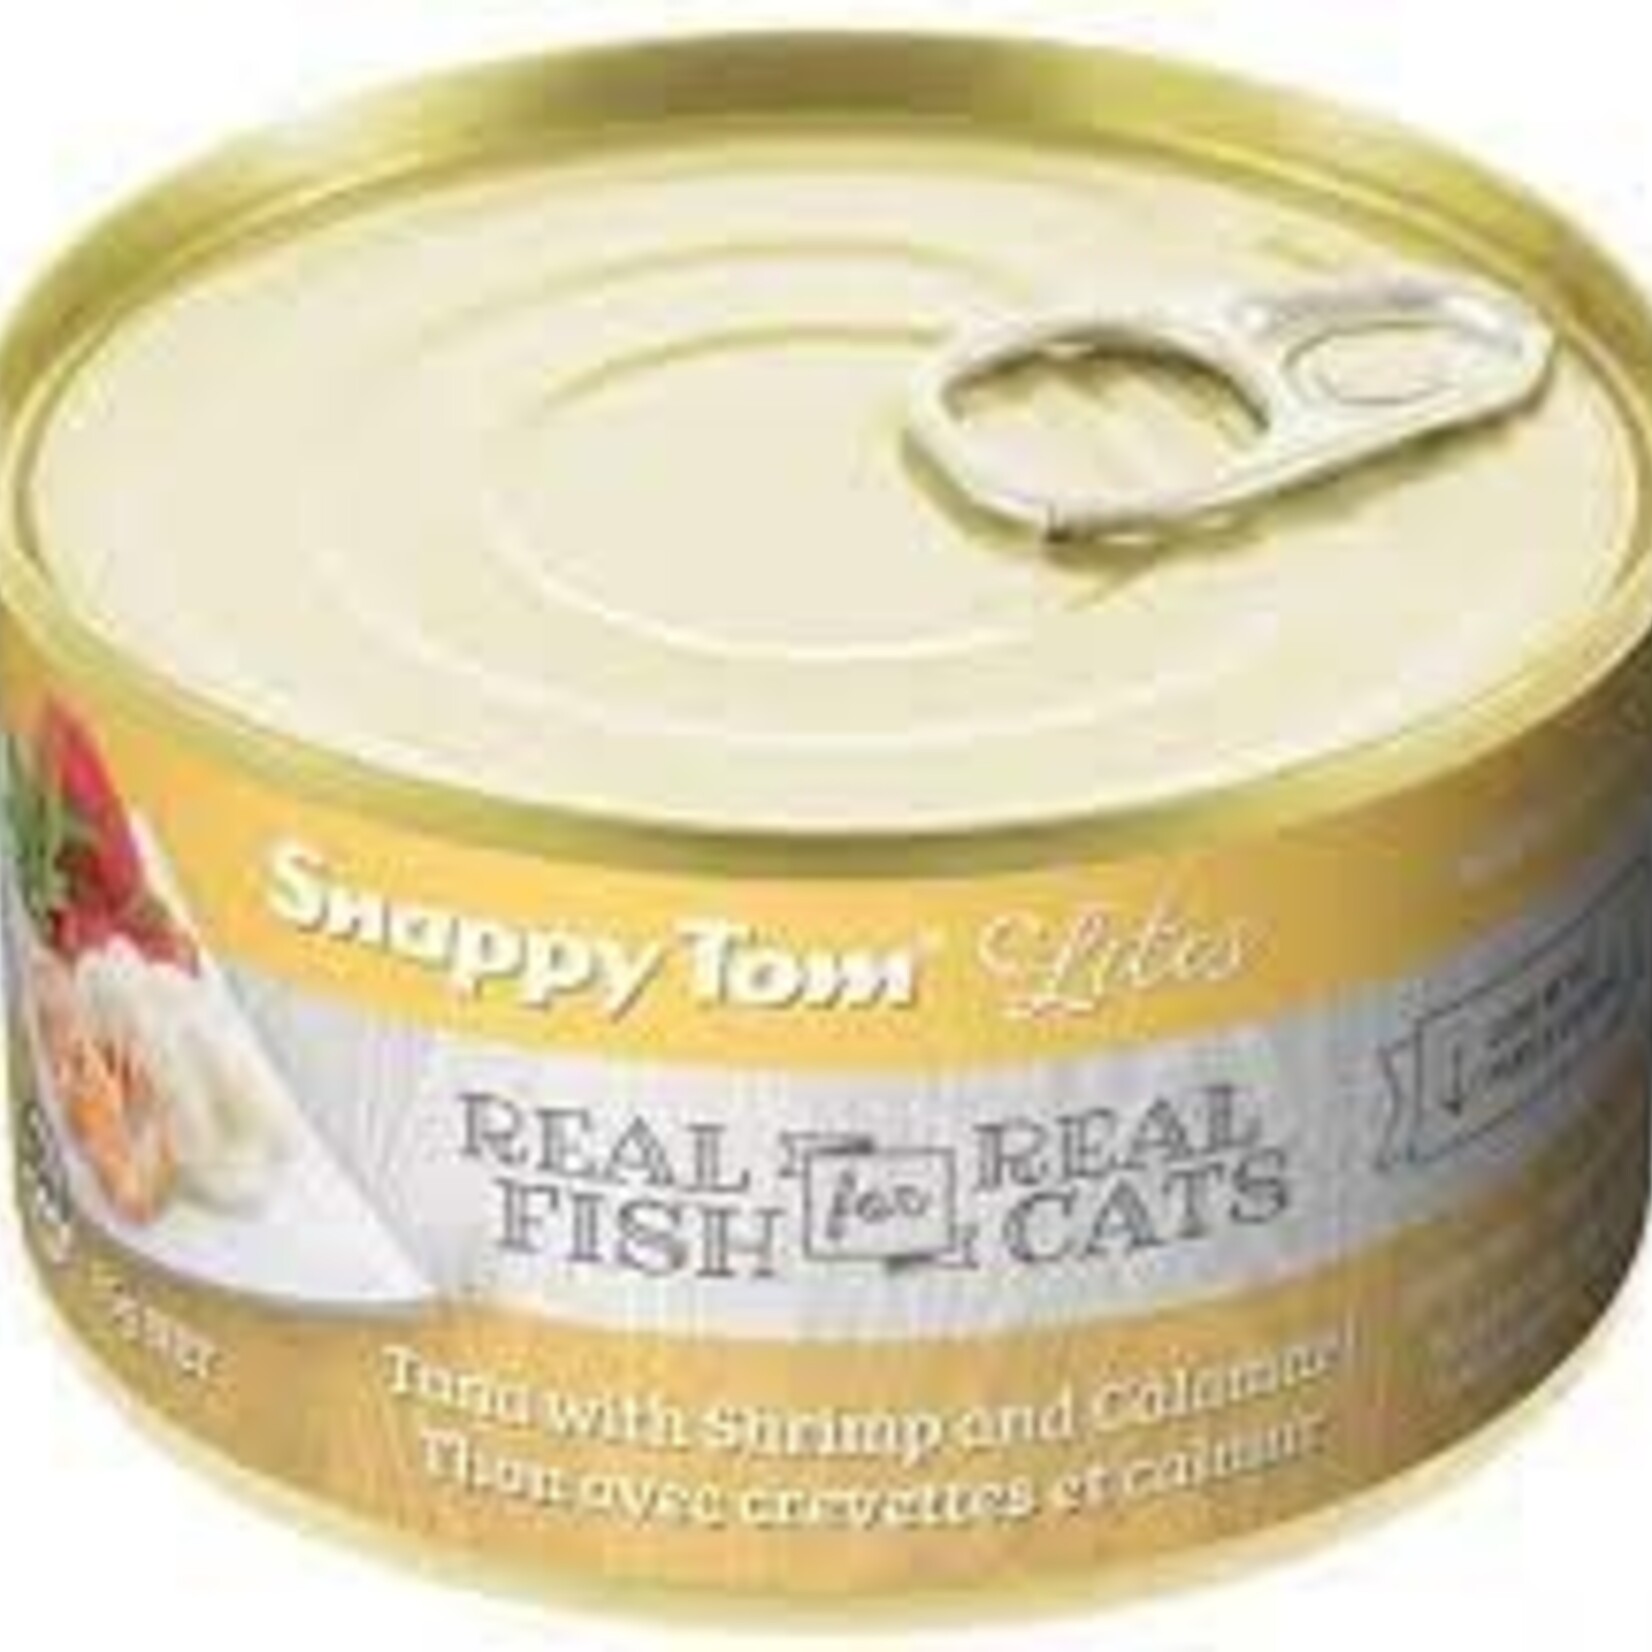 Snappy Tom Tuba with Shrimp & Calamrai